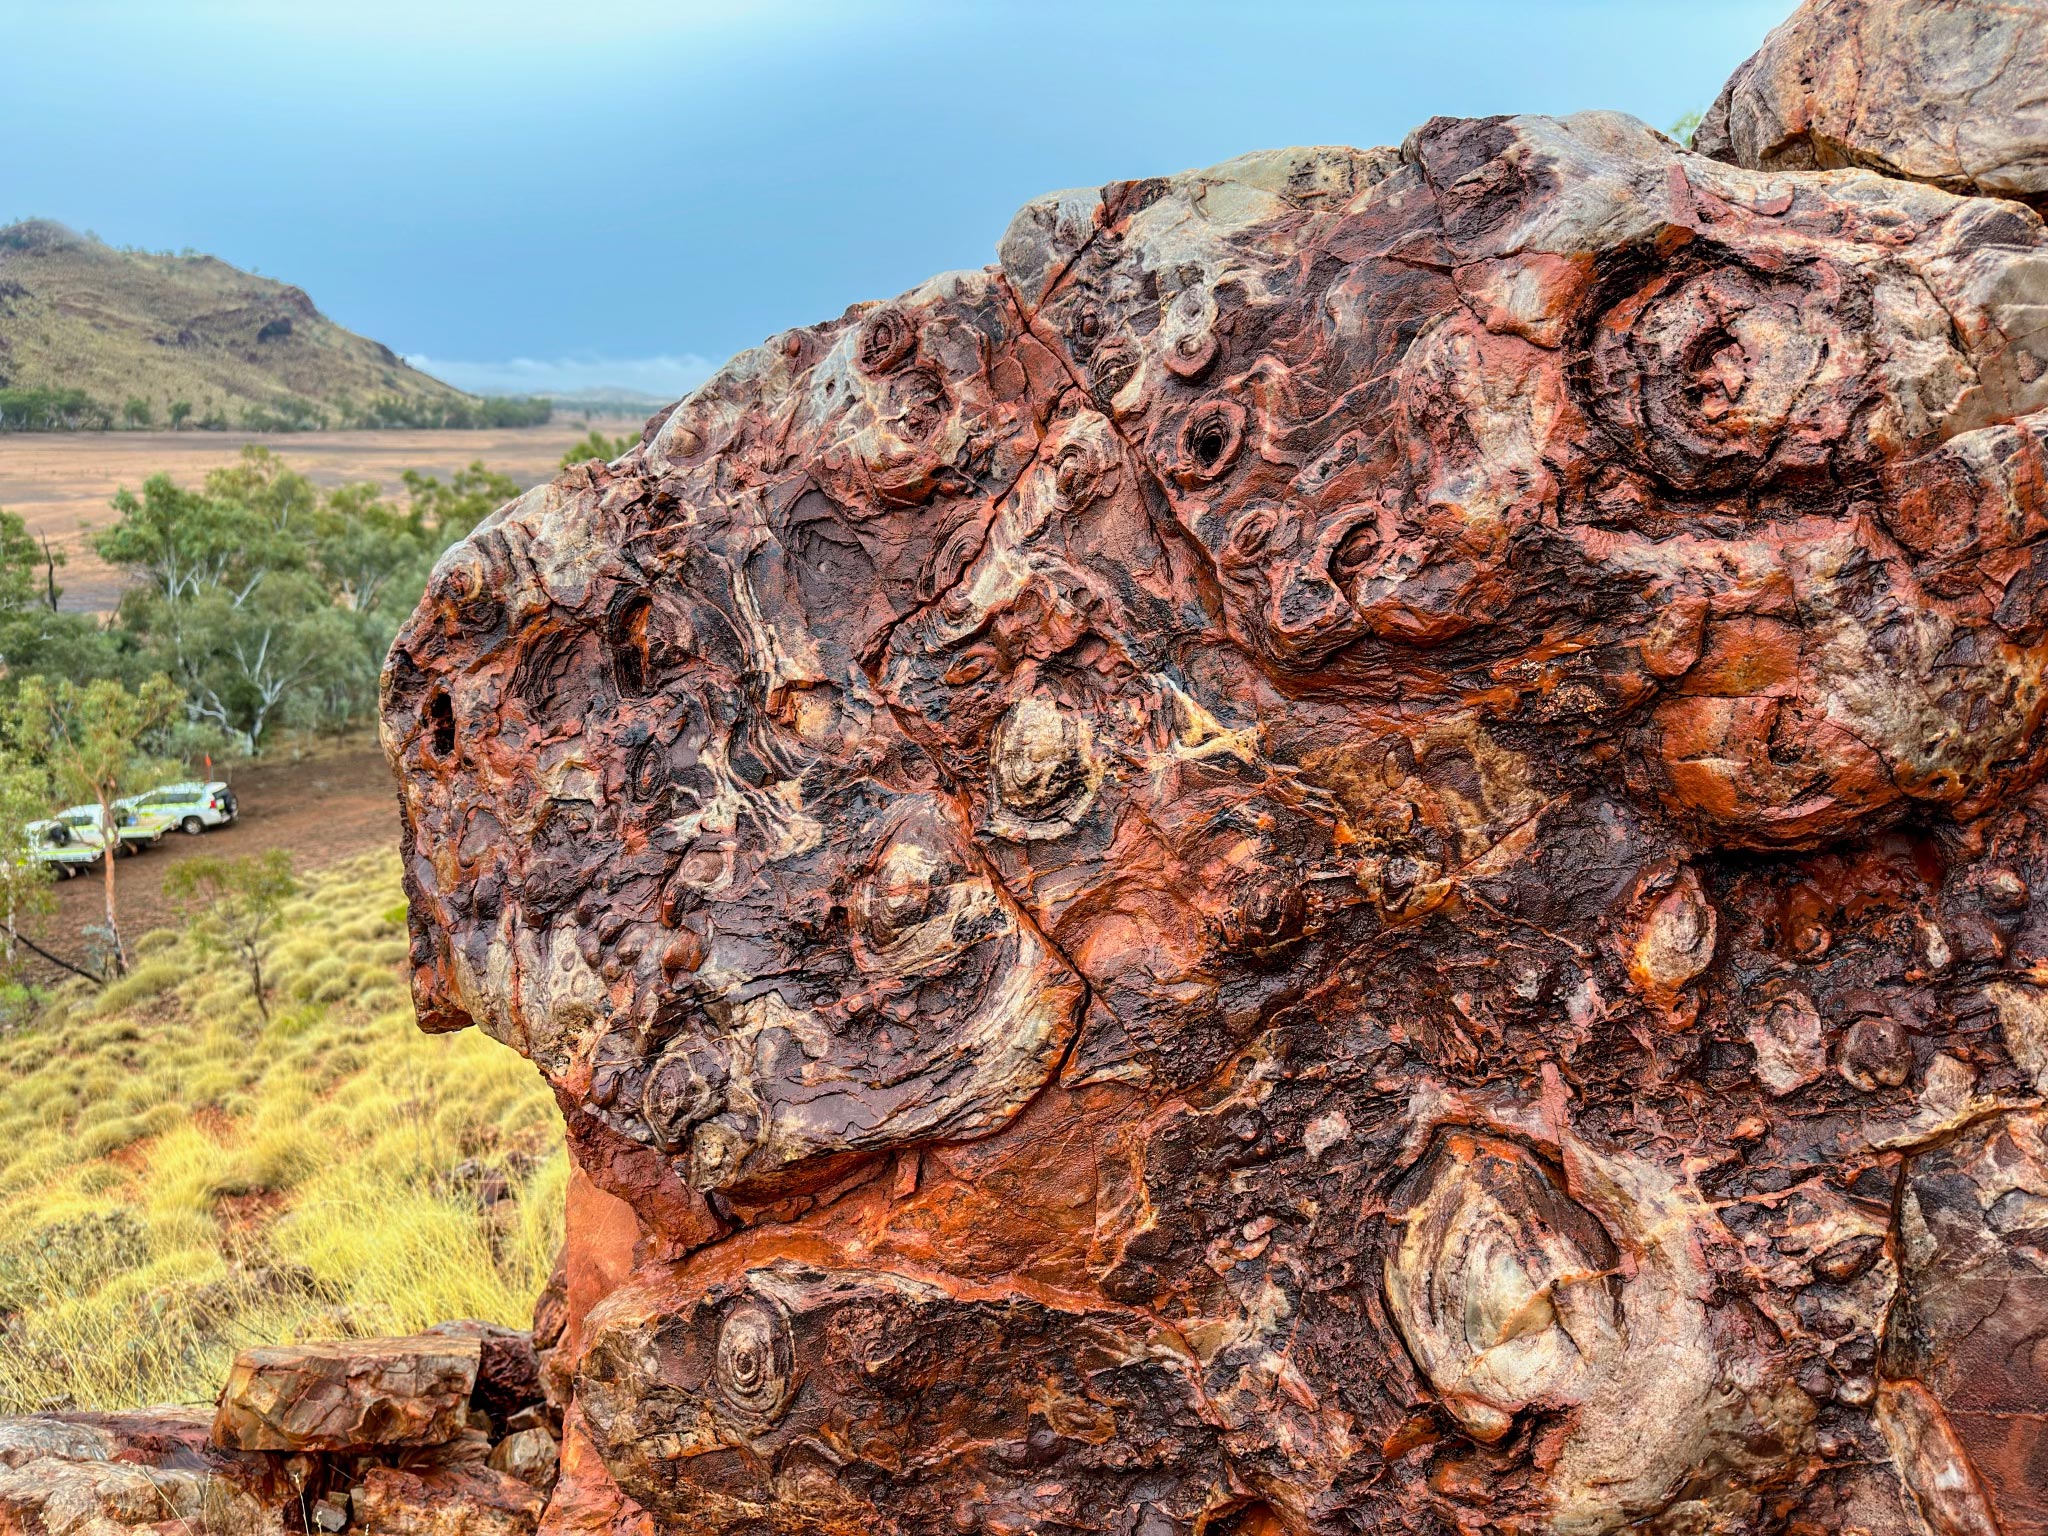 In ancient stromatolites in Australia, NASA has found a blueprint for Mars exploration